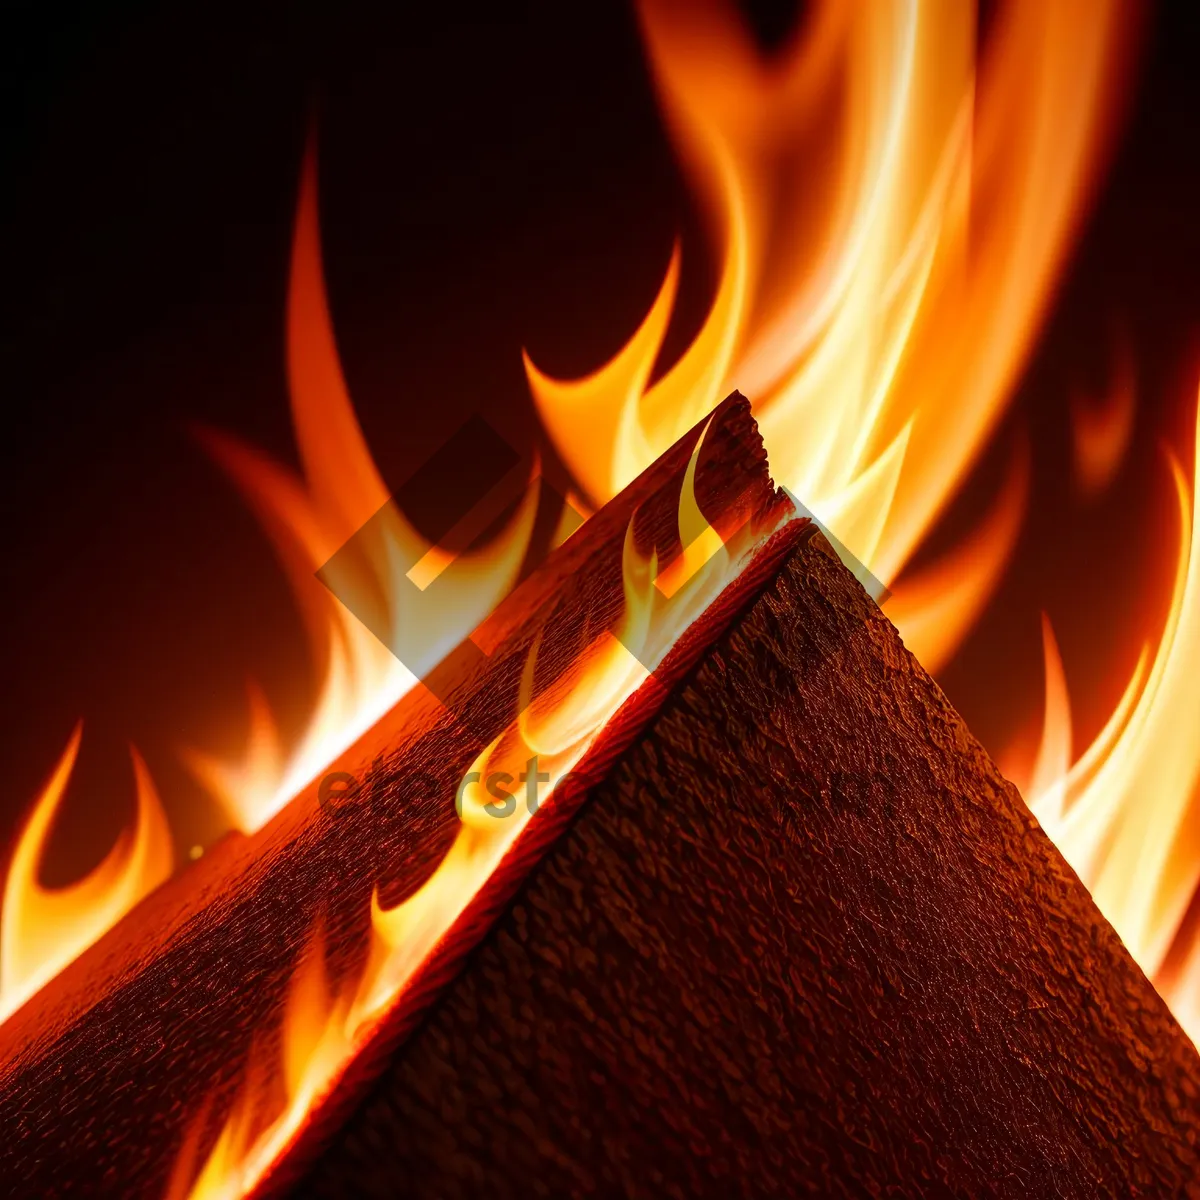 Picture of Inferno Blaze: Fiery Heat Embracing Darkness